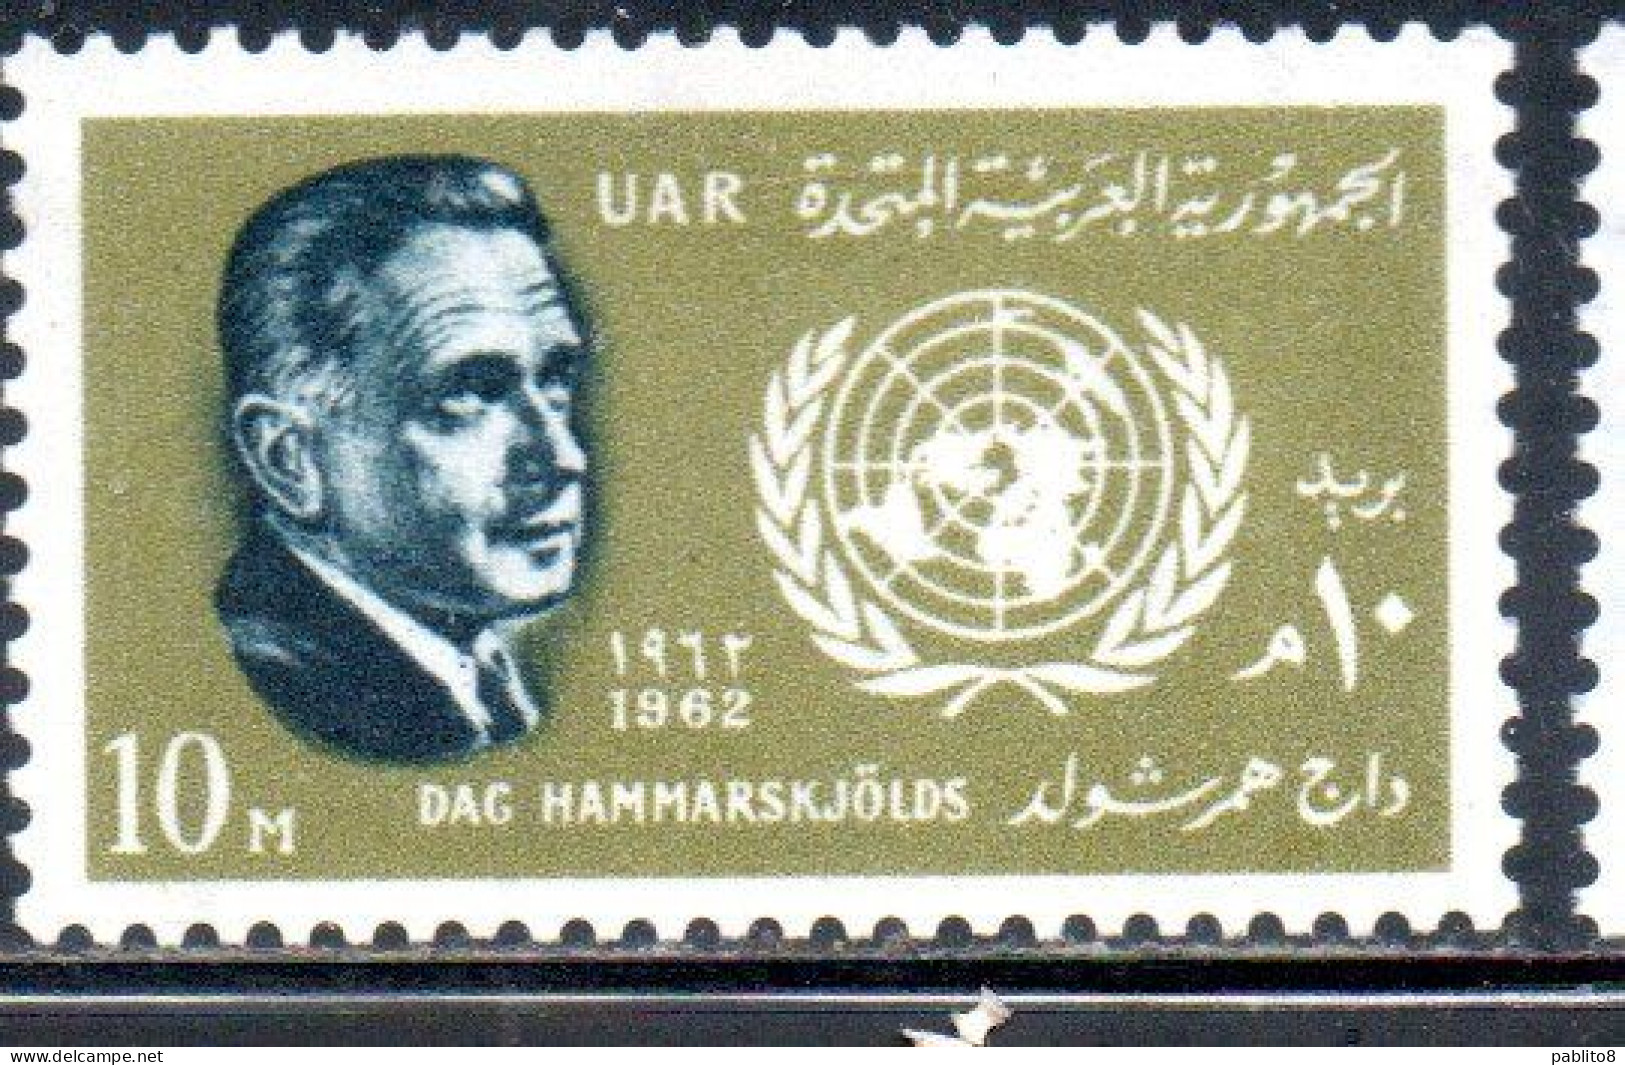 UAR EGYPT EGITTO 1962 DAG HAMMARSKJOLD SECRETARY GENERAL OF THE UN ONU 10m MH - Neufs